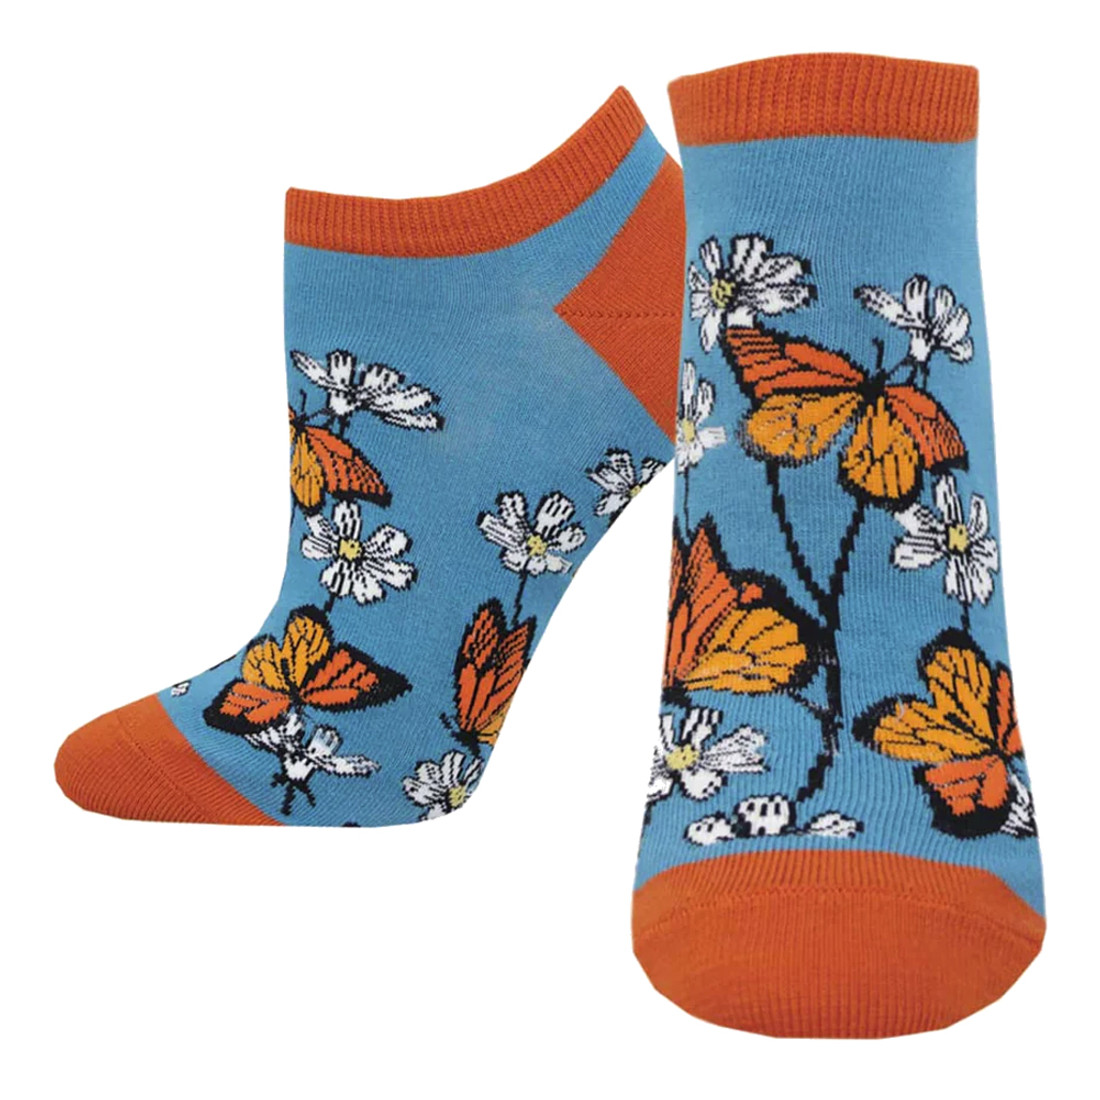 Socksmith Women's Shortie Ankle Socks - Daisy Monarchy